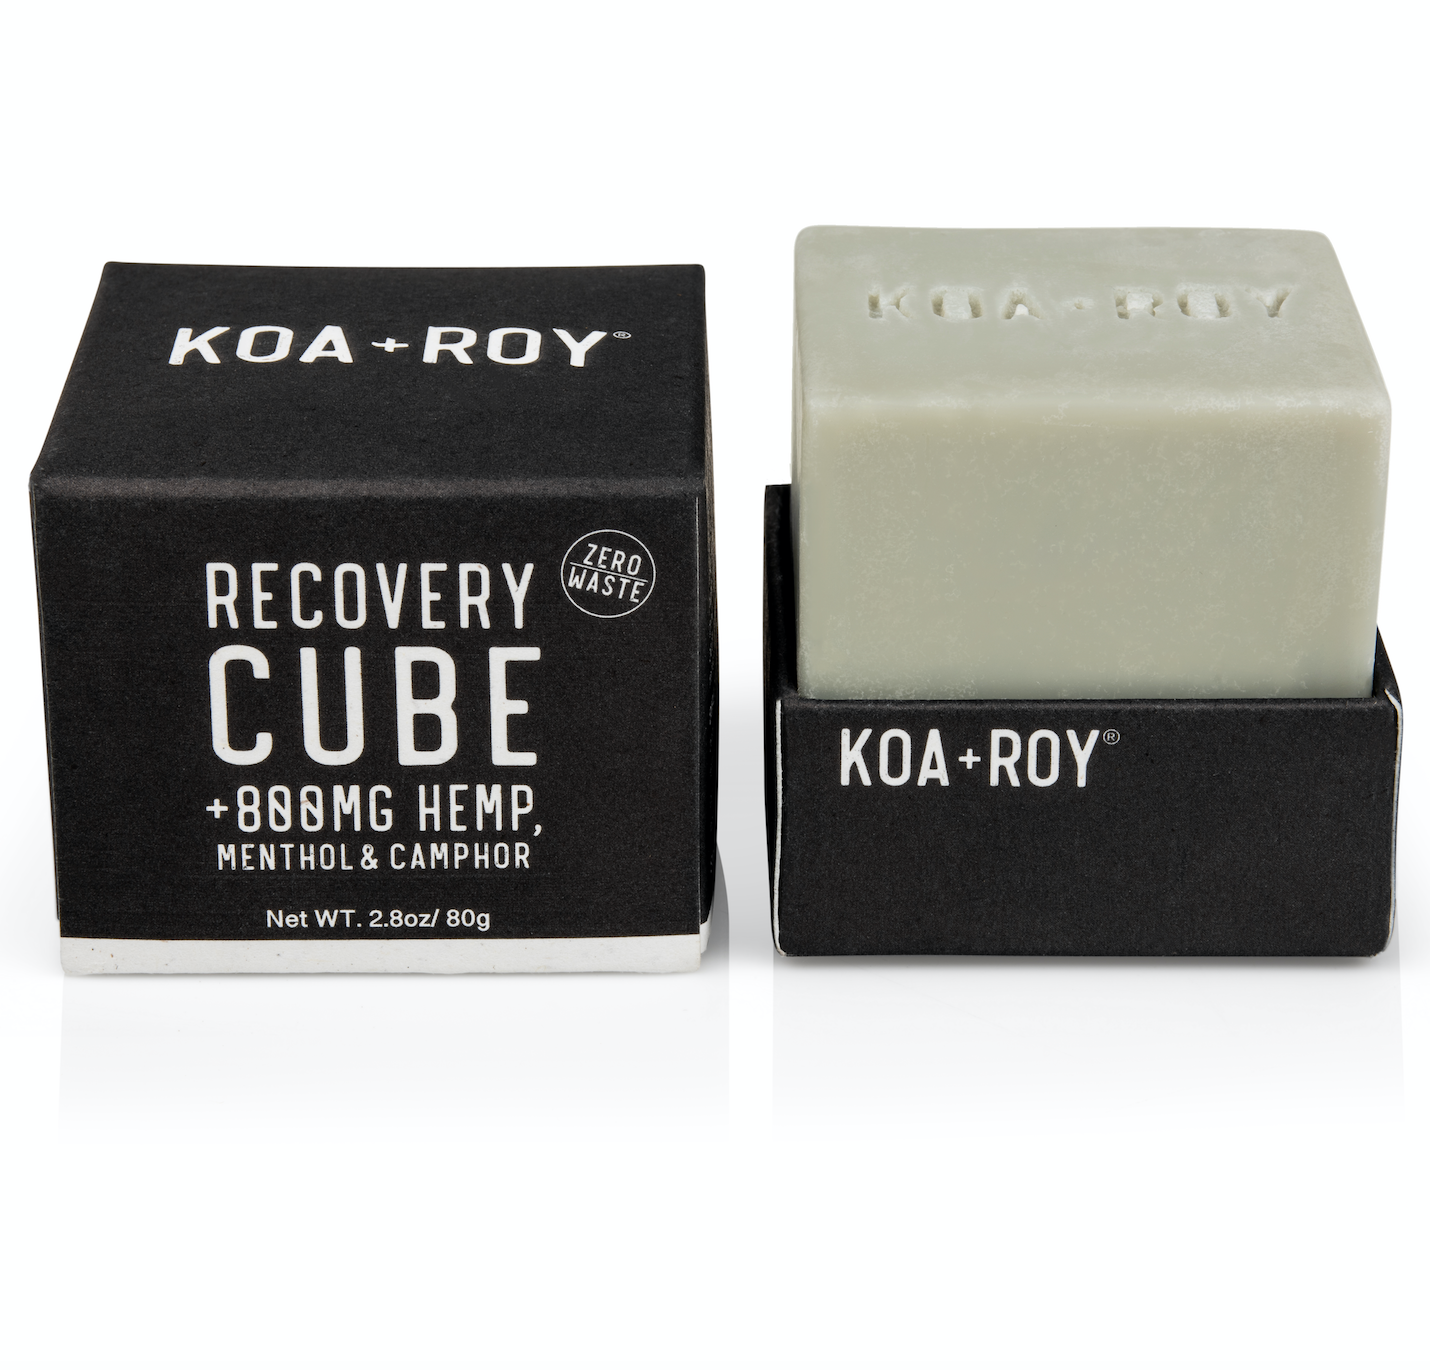 Recovery Cube + cbd menthol & camphor